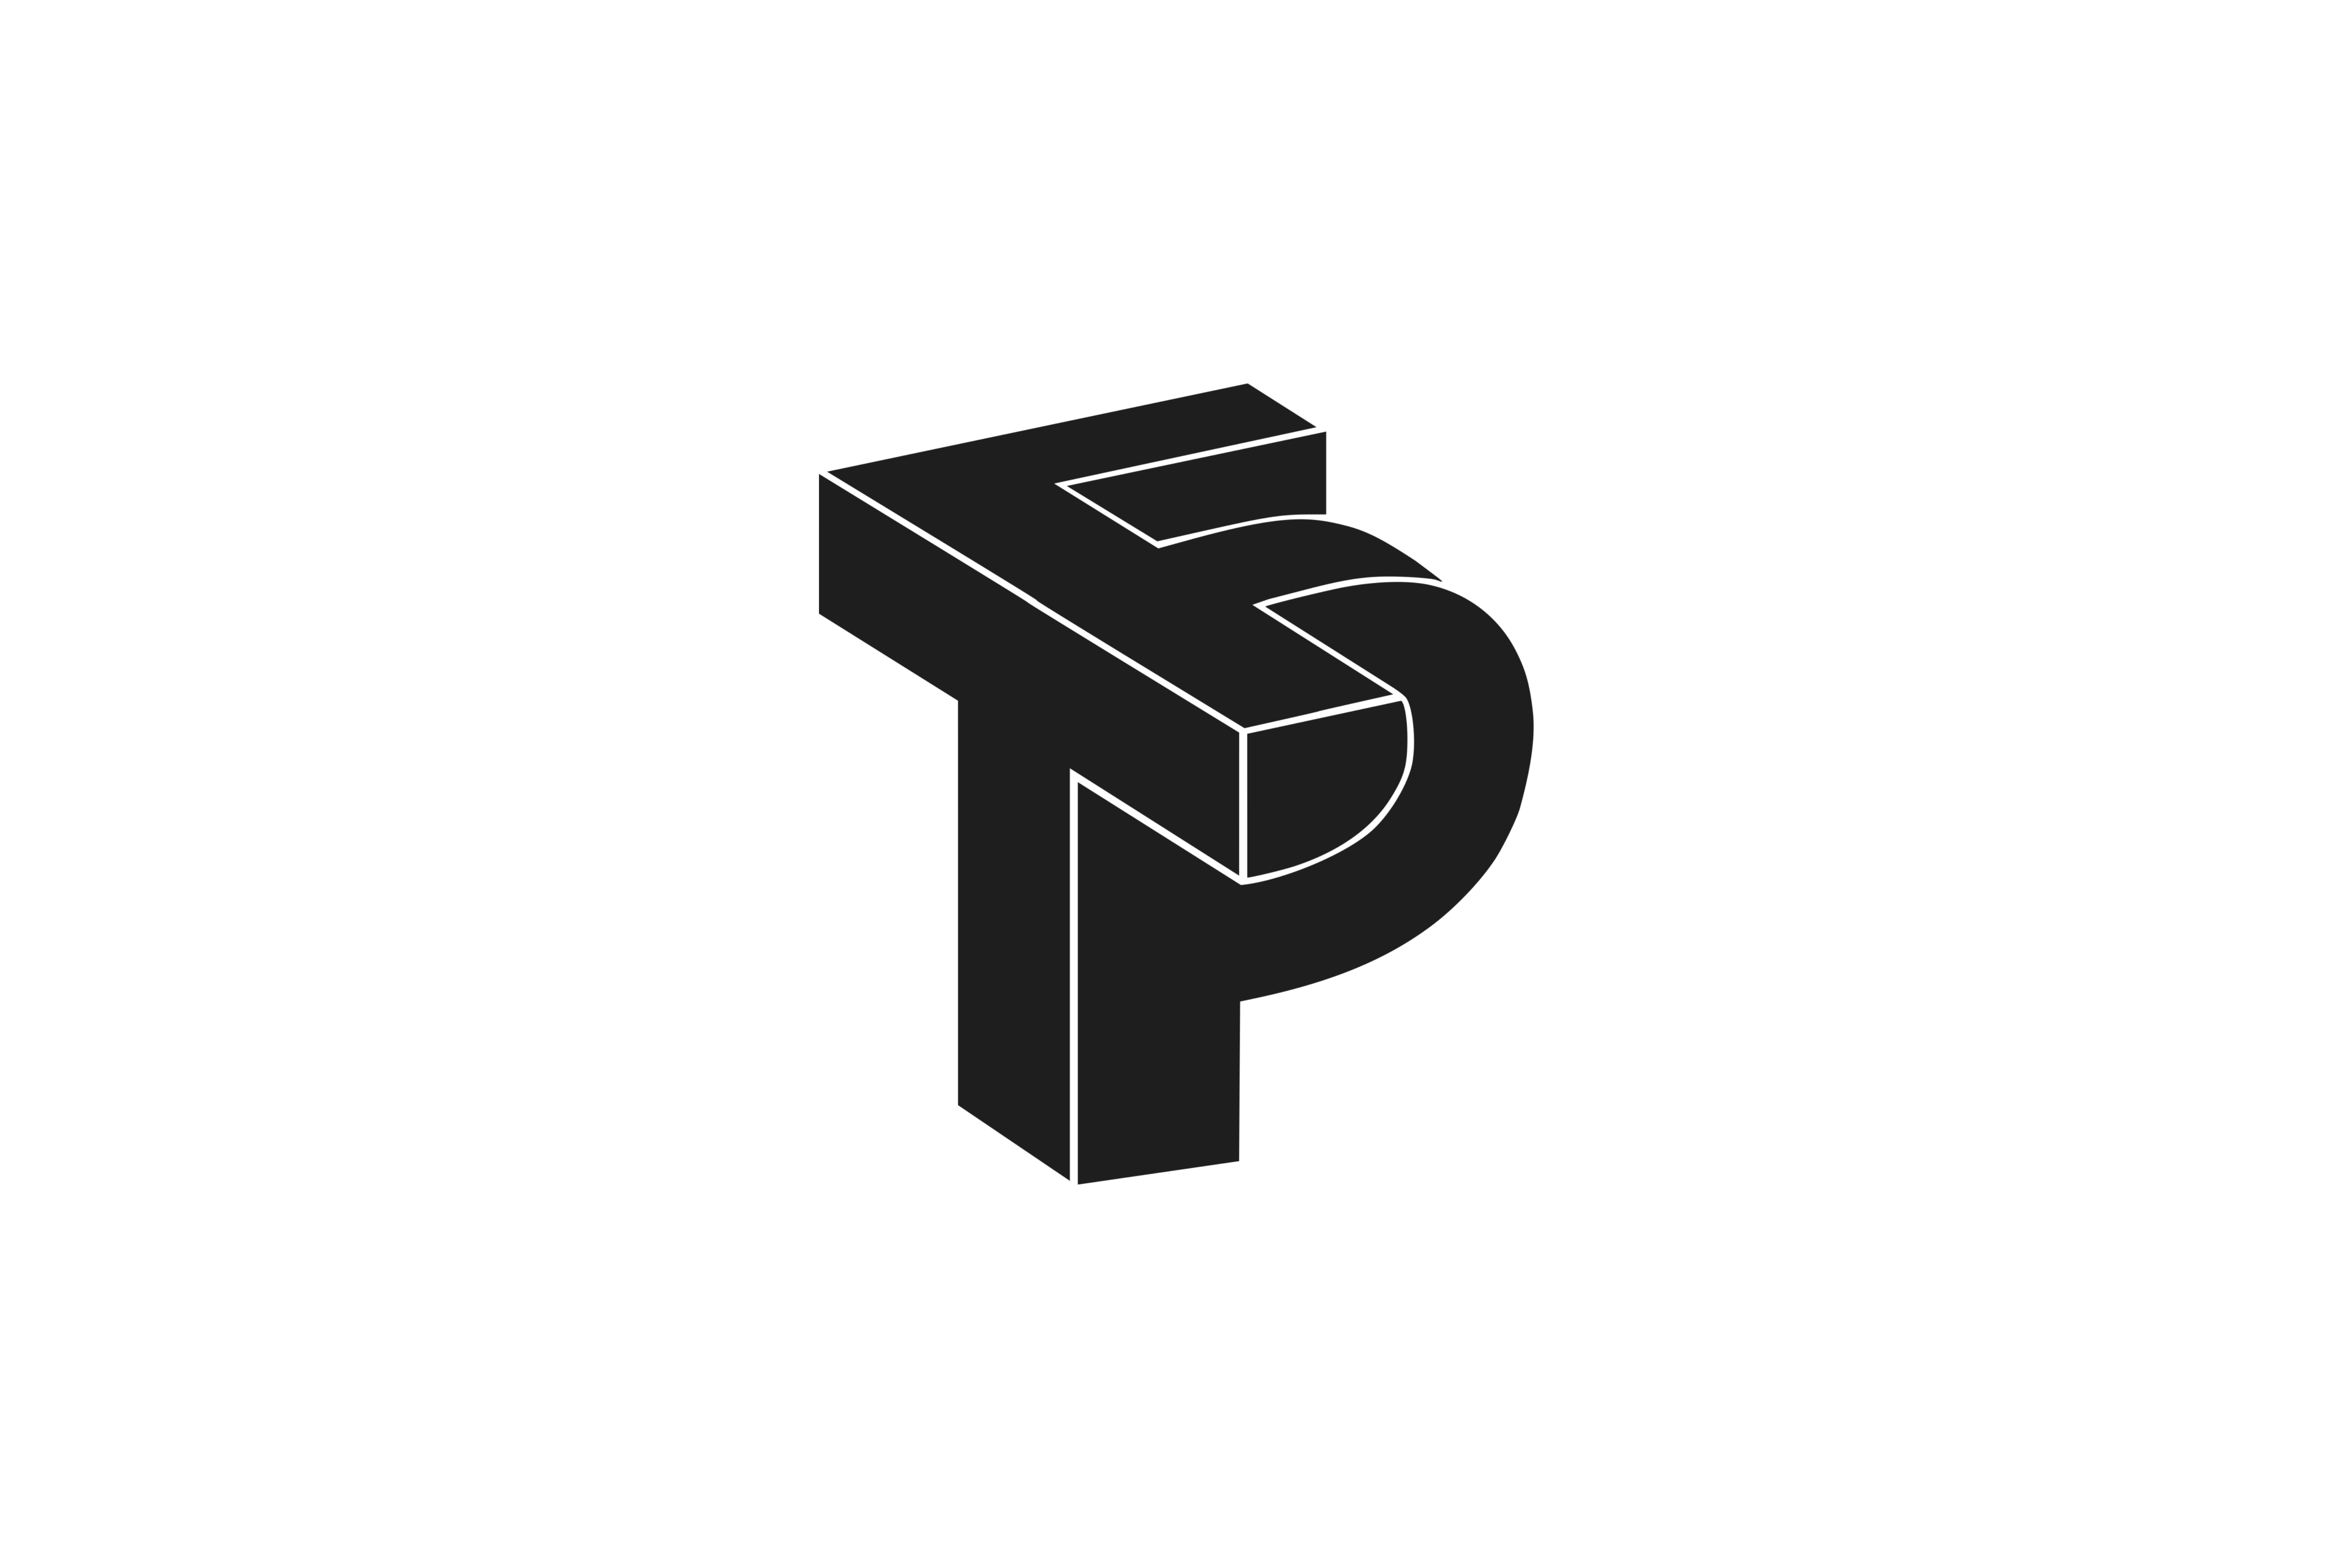 FTP Logo - Wallpapers]Desktop walls of the new FTP logo - Album on Imgur